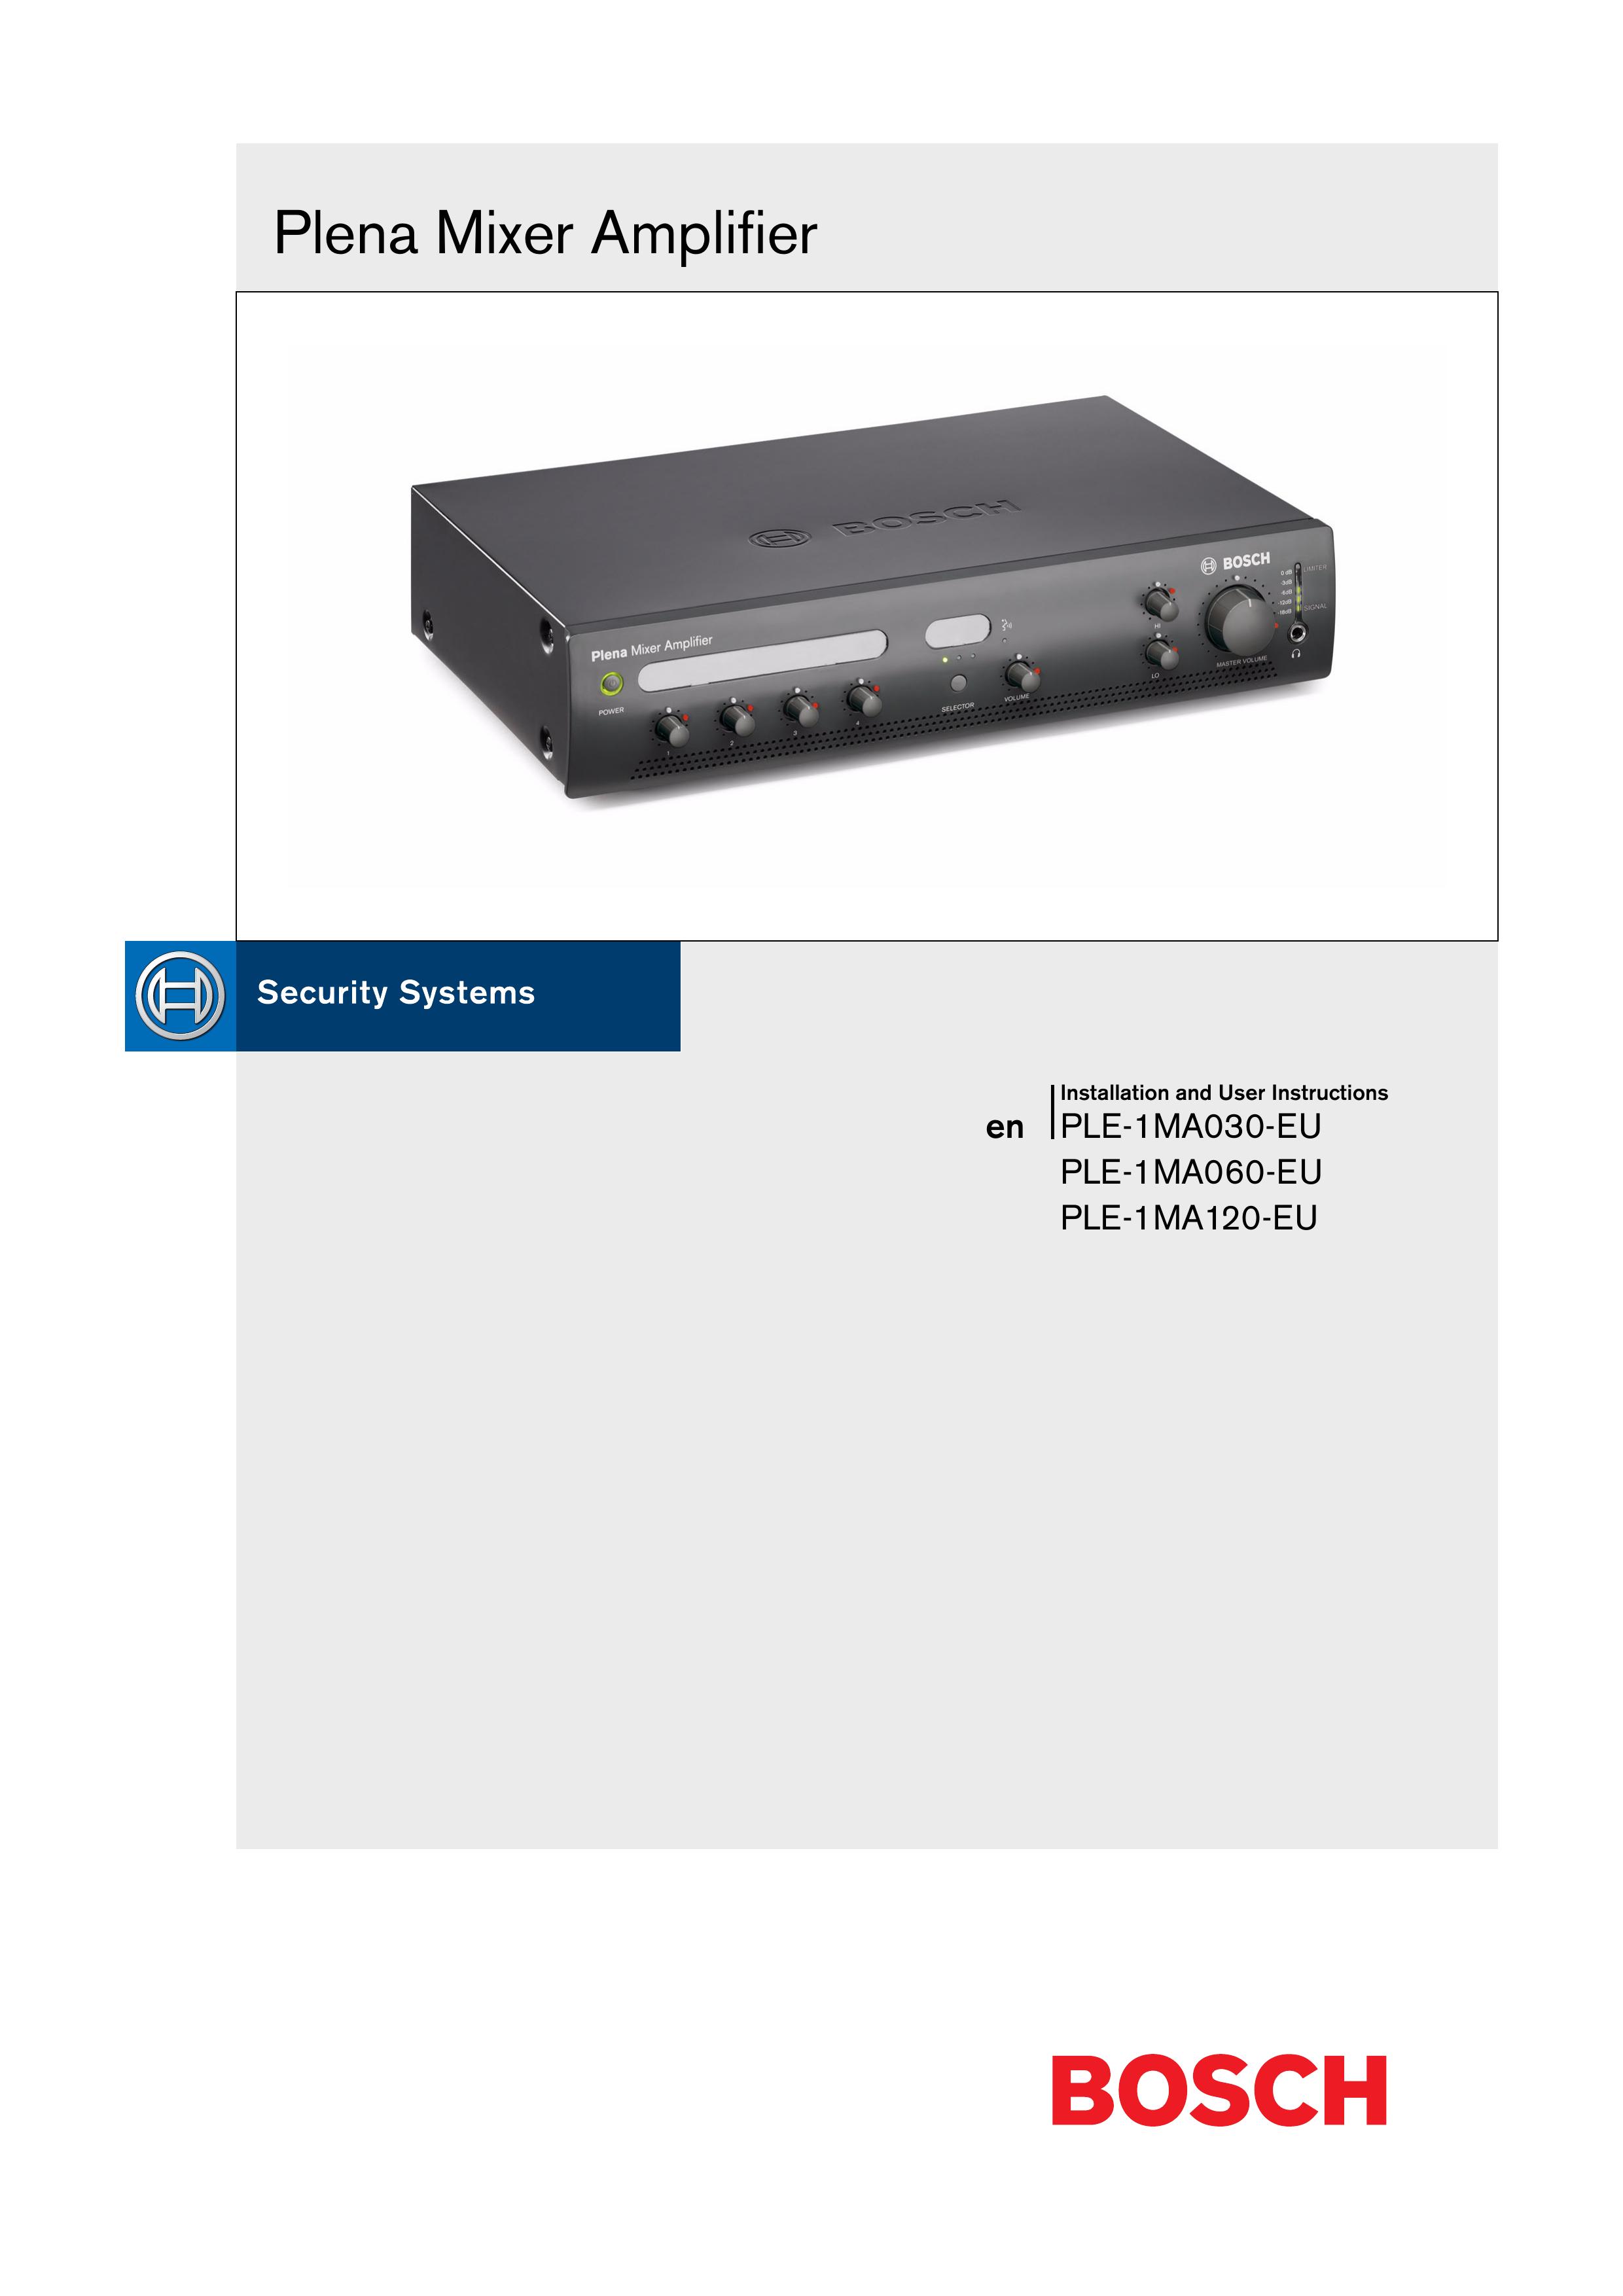 Bosch Appliances PLE-1MA120-EU Music Mixer User Manual